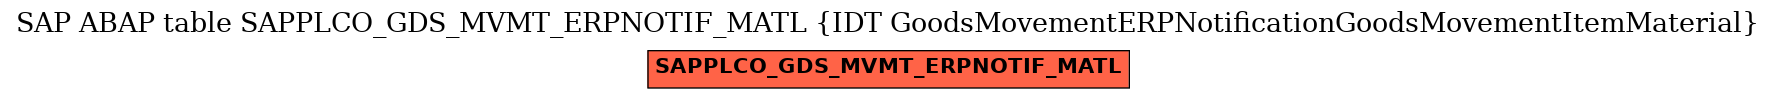 E-R Diagram for table SAPPLCO_GDS_MVMT_ERPNOTIF_MATL (IDT GoodsMovementERPNotificationGoodsMovementItemMaterial)